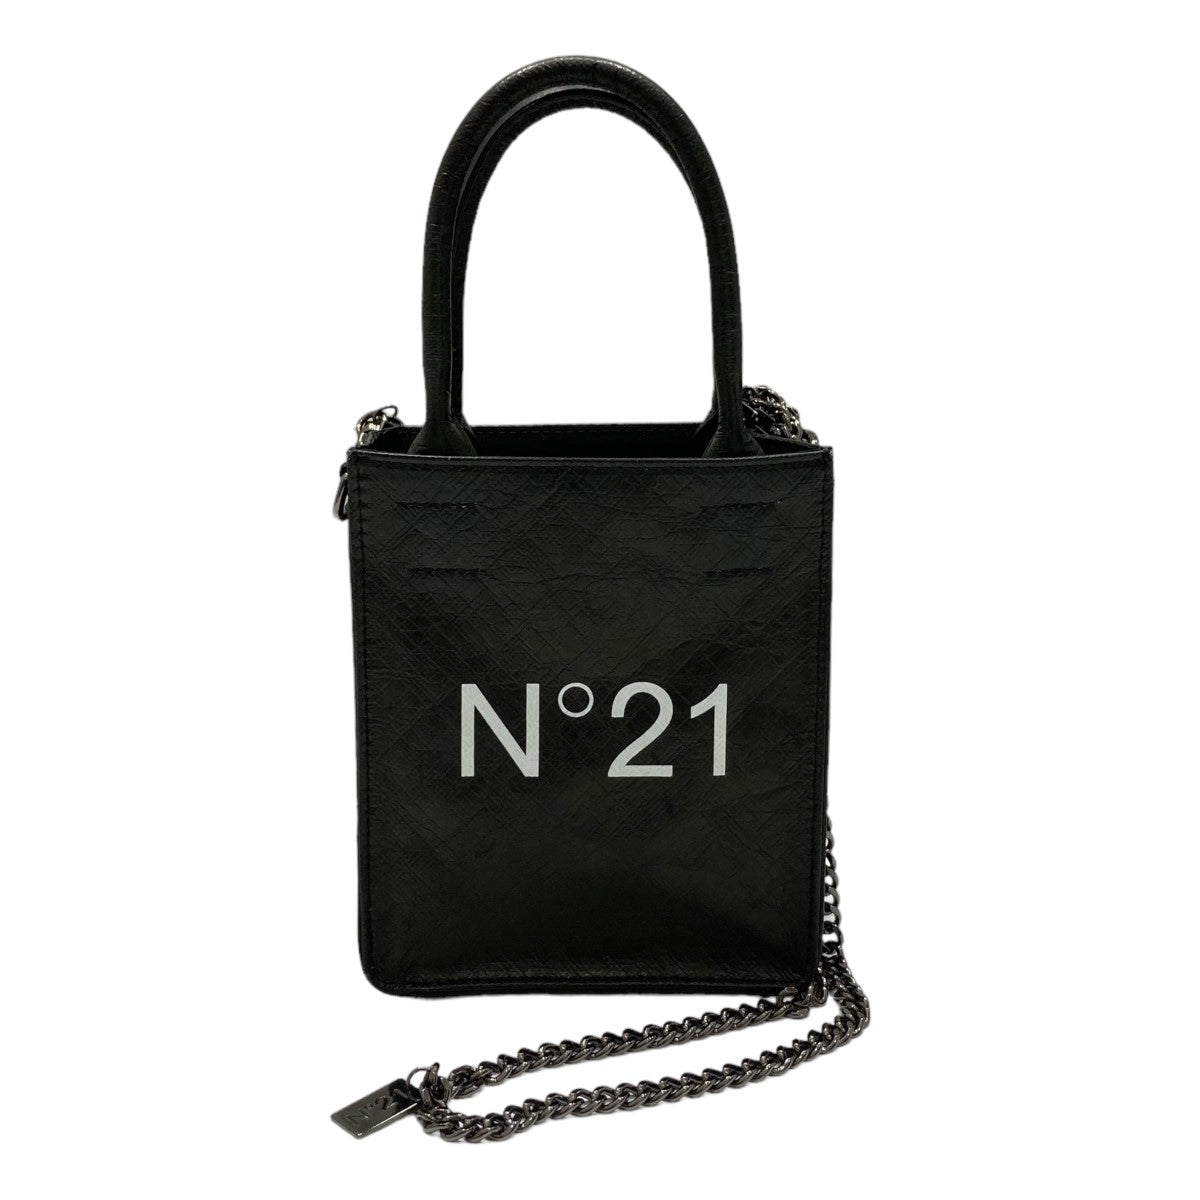 N°21(ヌメロ ヴェントゥーノ) チェーンショルダーミニバッグ ブラック